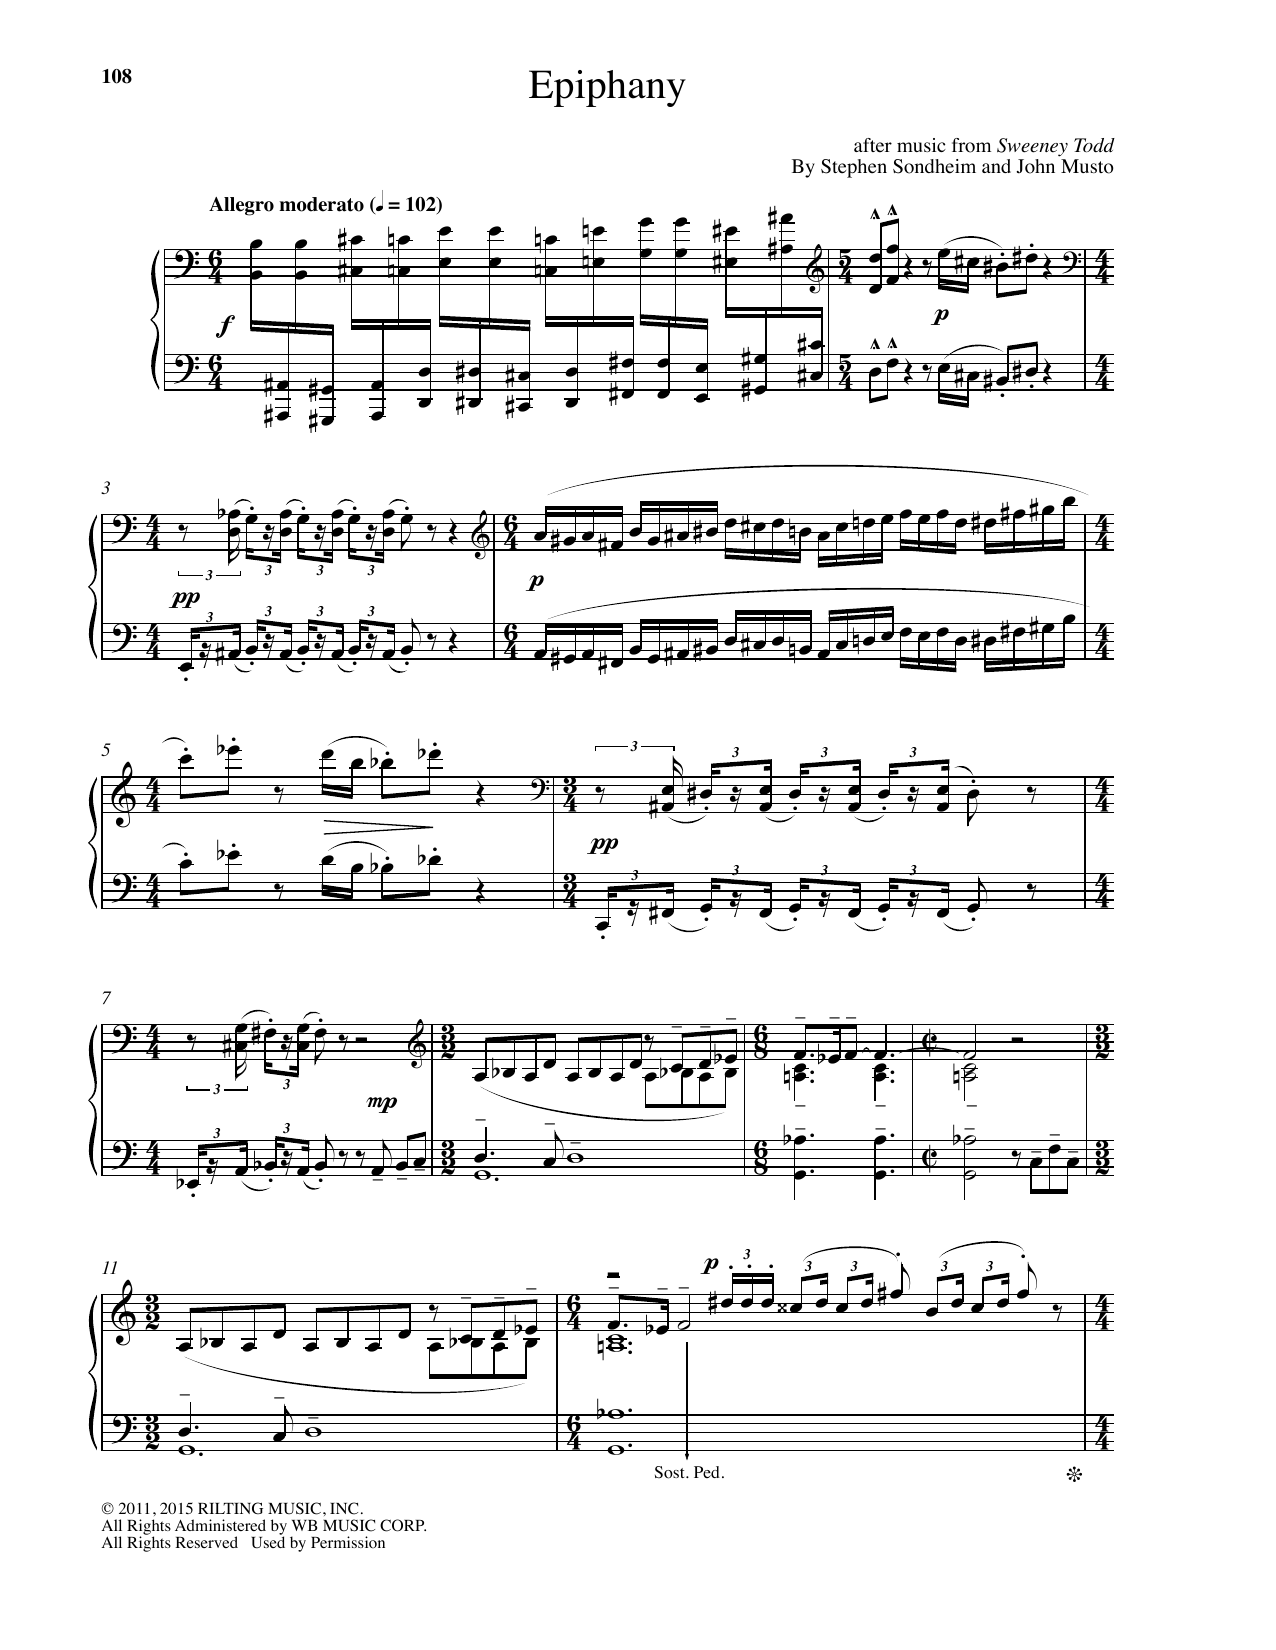 John Musto Epiphany Sheet Music Notes & Chords for Piano - Download or Print PDF